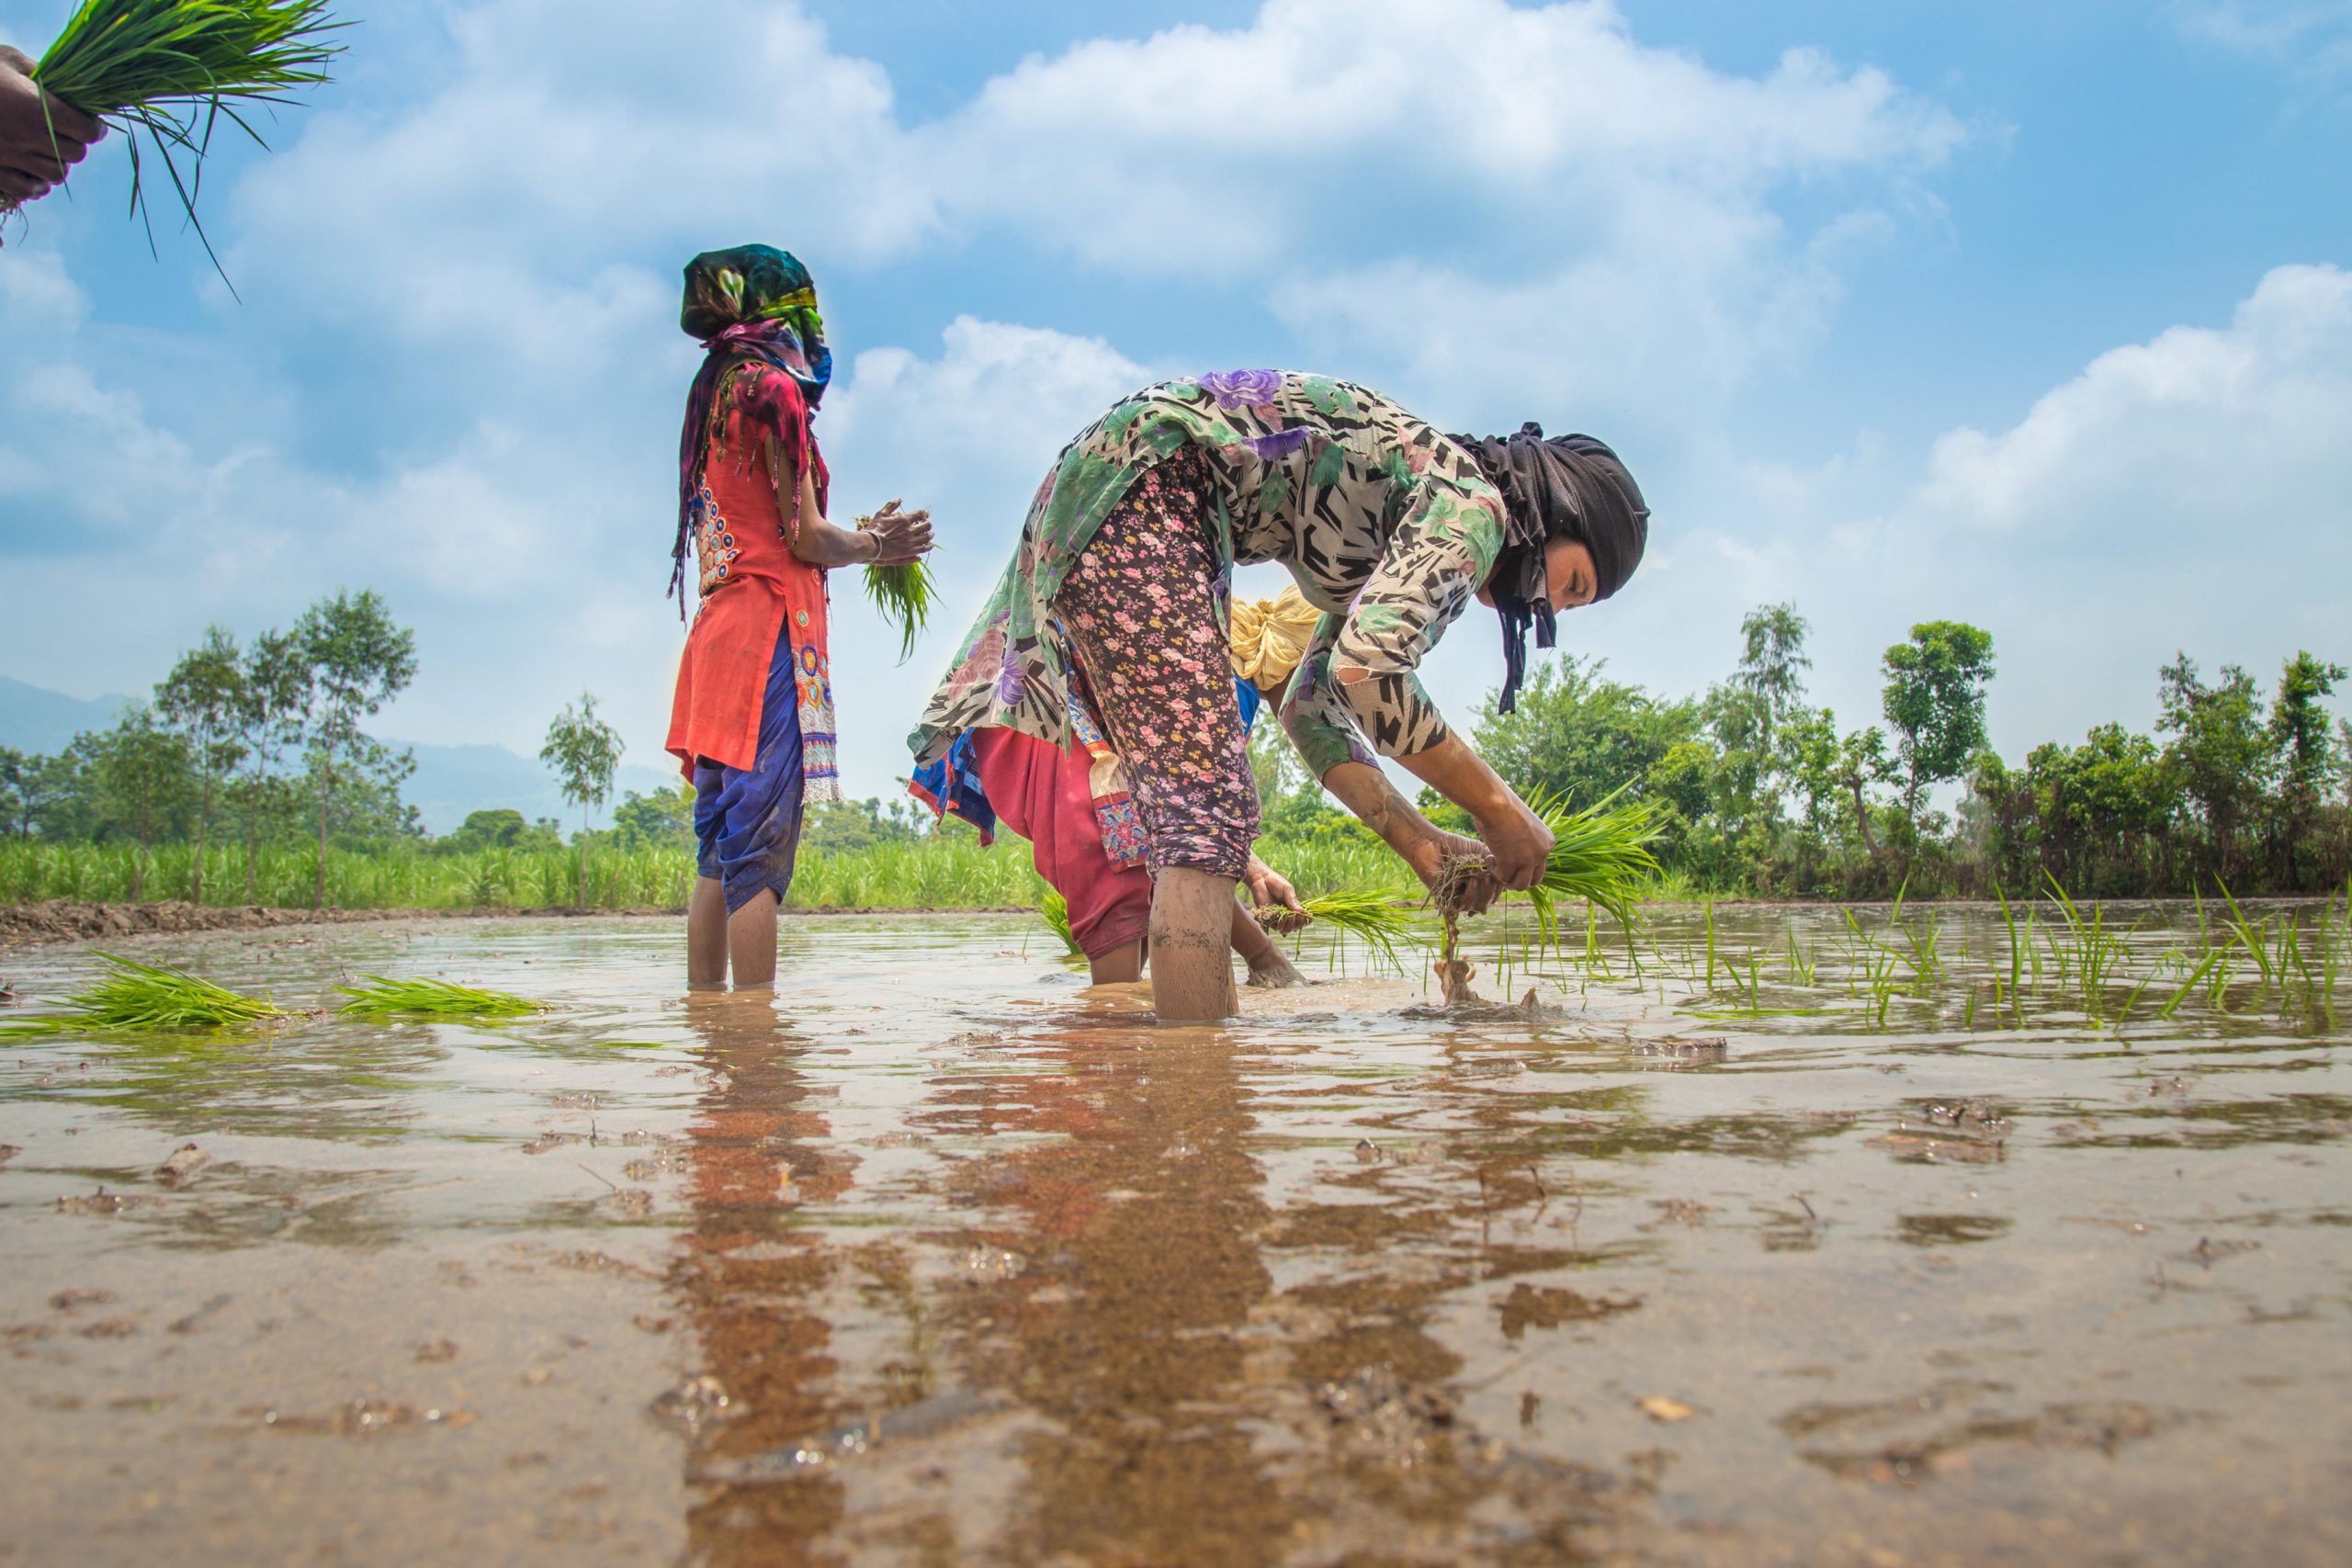 <p>Farmers transplanting rice seedlings in India [image by: Umesh Negi/Alamy]</p>